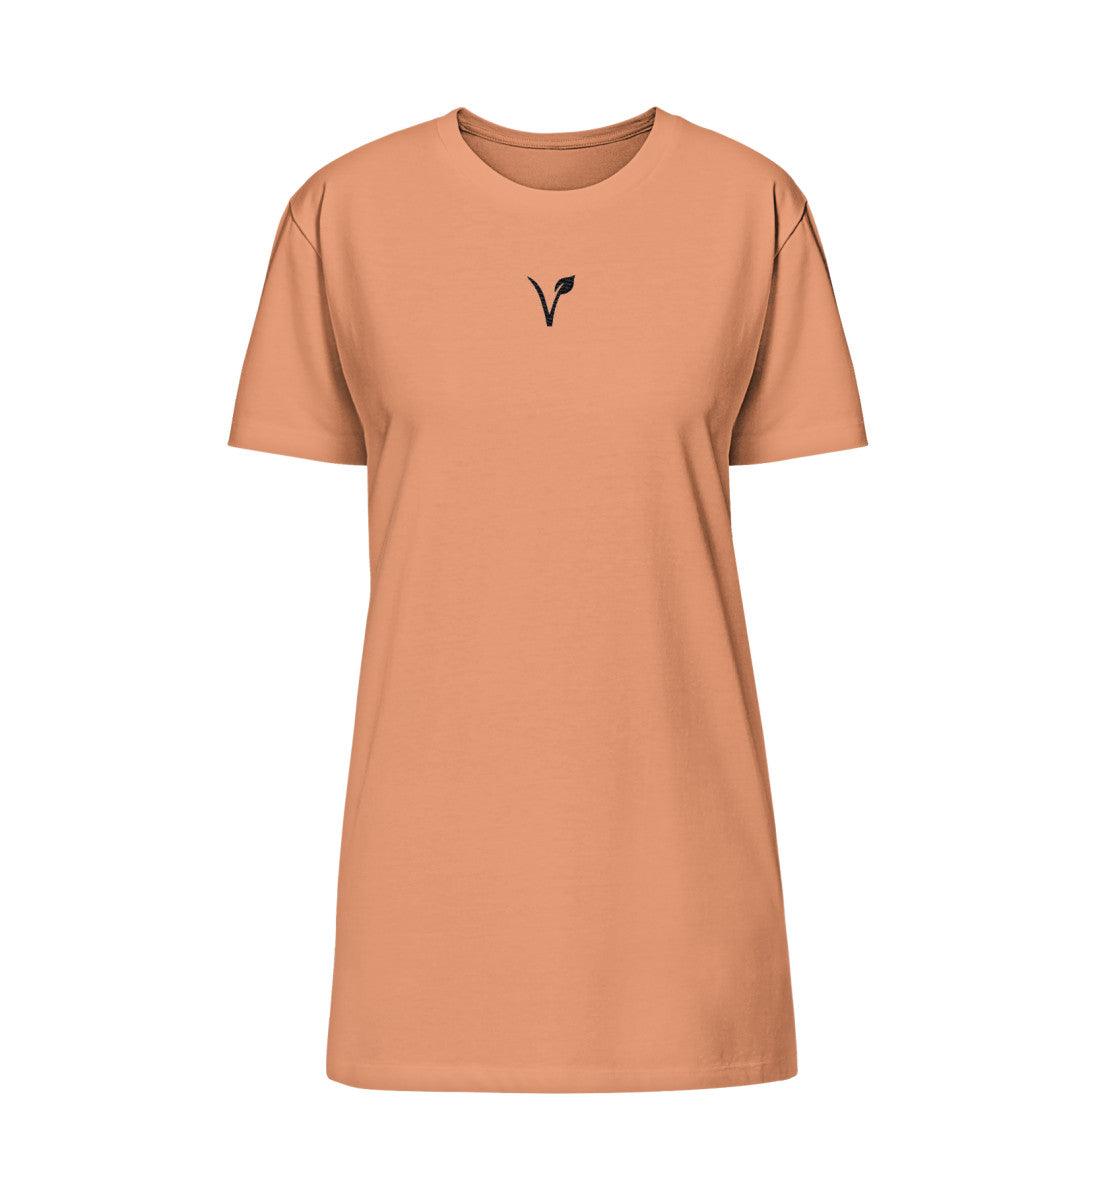 V - T-Shirt Kleid mit Stick - Team Vegan © vegan t shirt